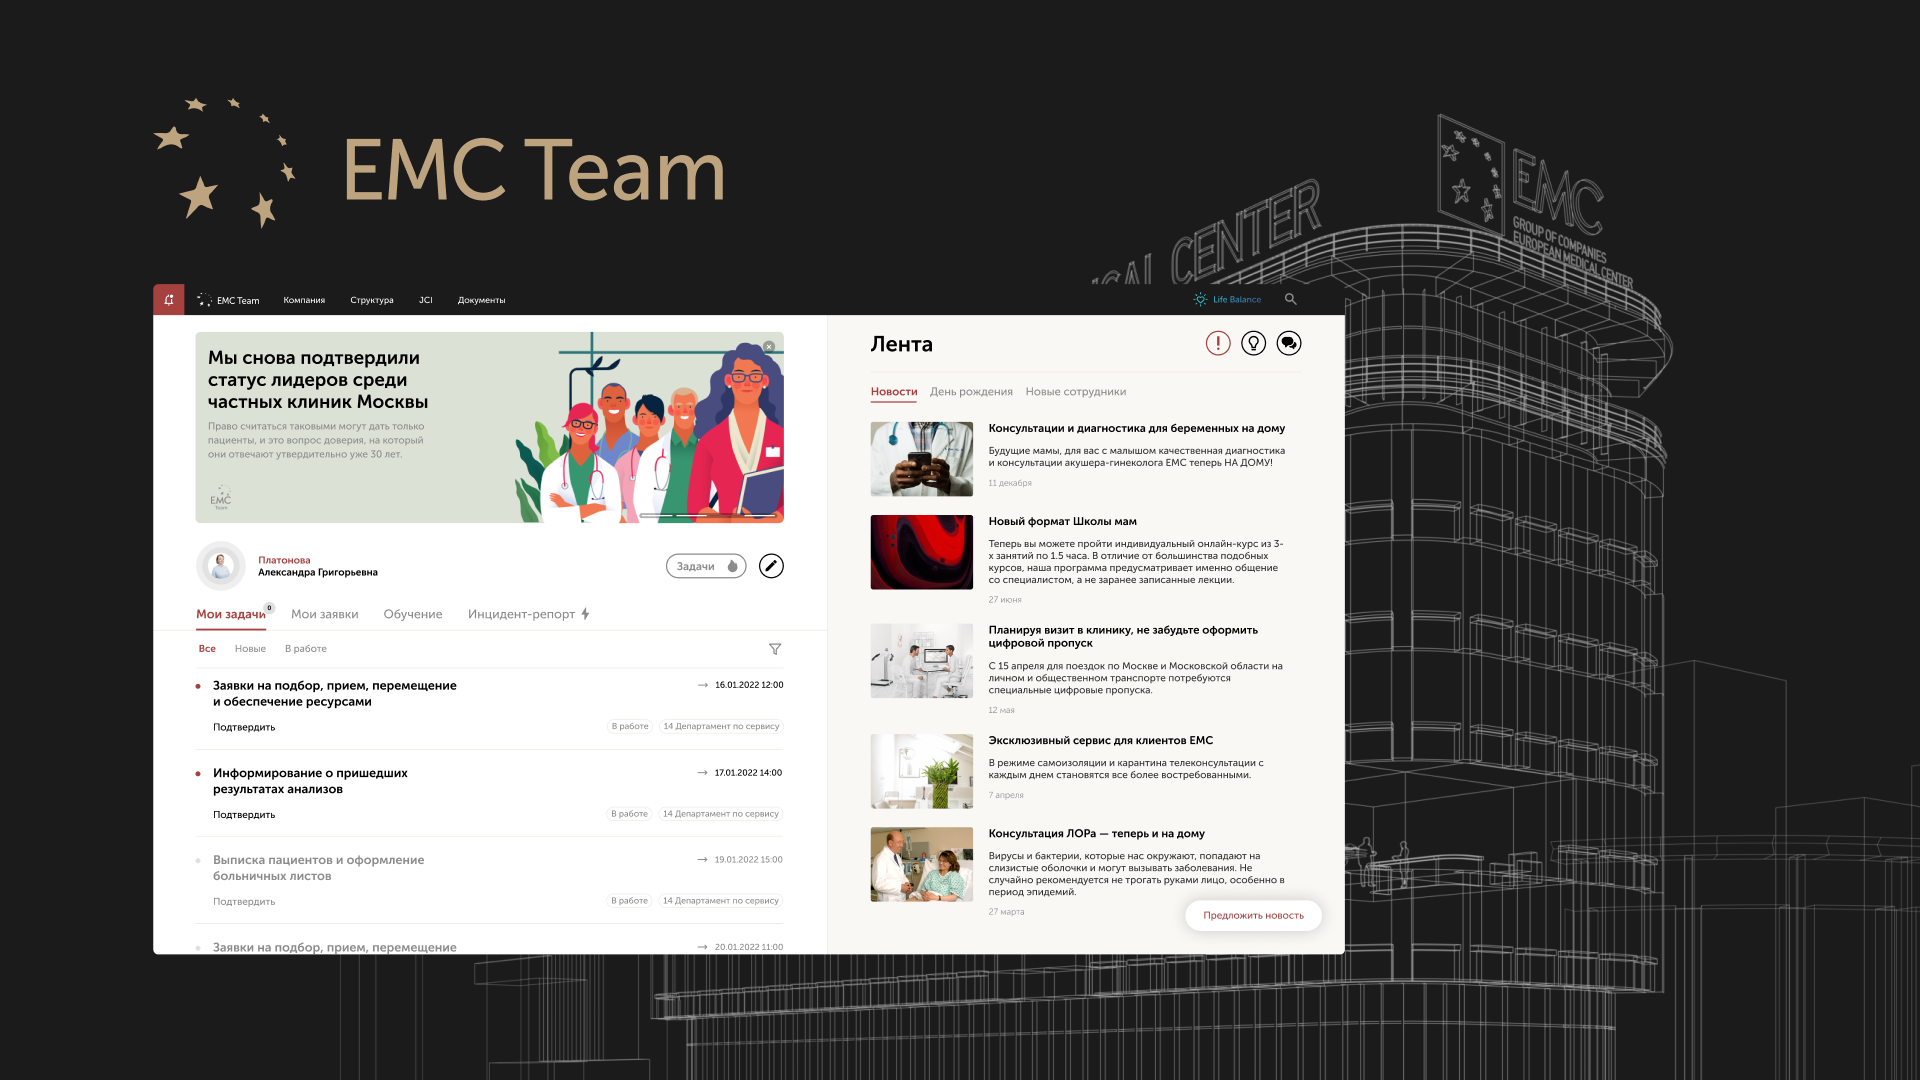 EMC Medical Center Corporate Portal